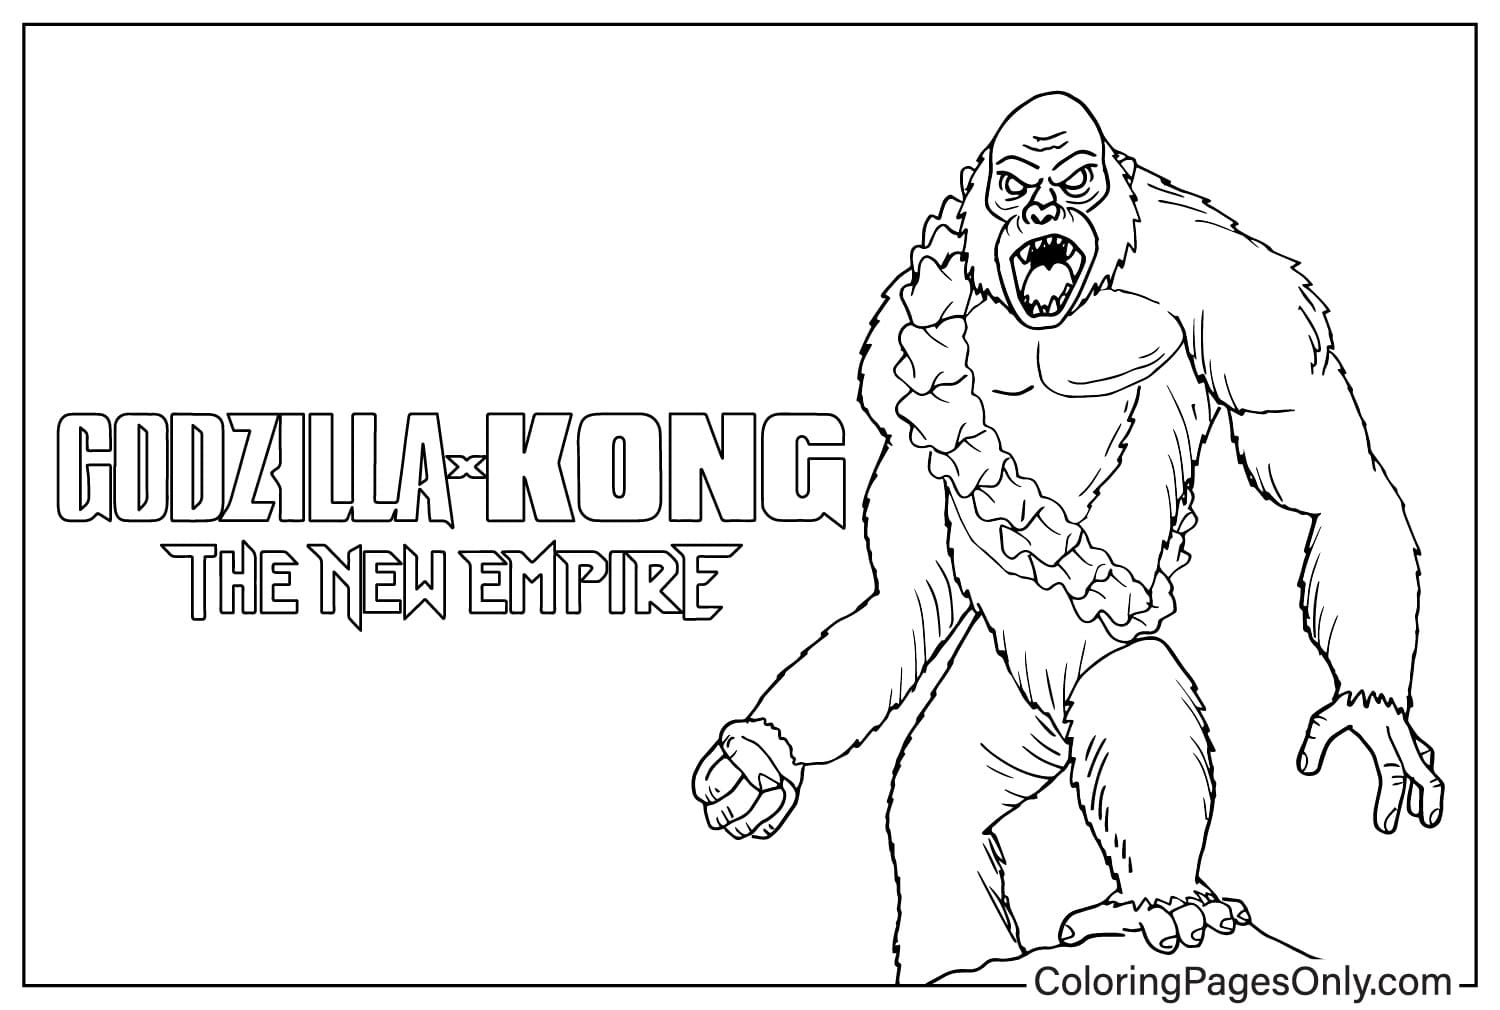 Godzilla x Kong- The New Empire from Godzilla x Kong: The New Empire